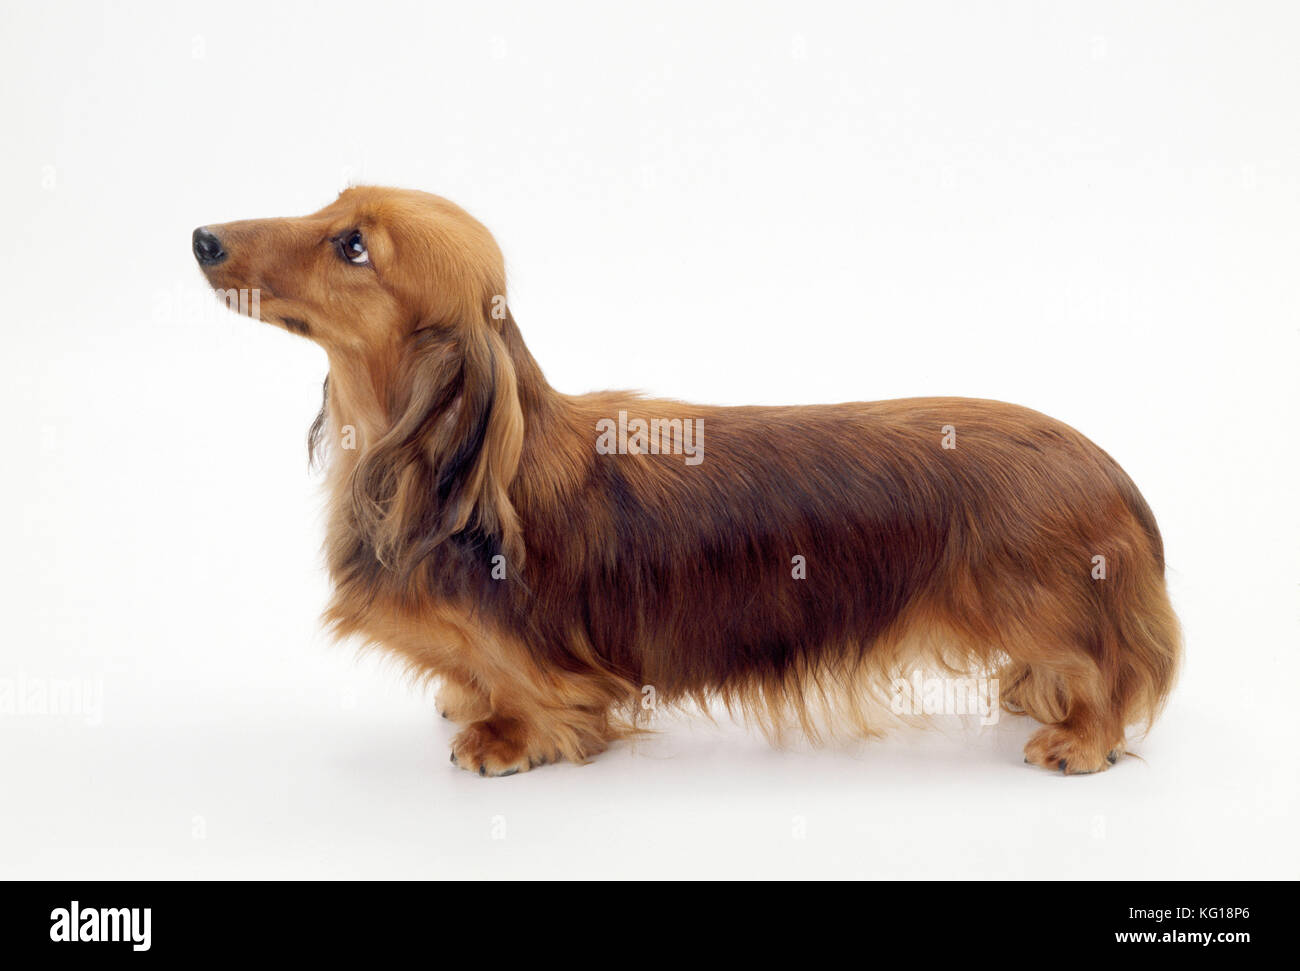 Dog - Miniature Longhaired Dachshund Stock Photo - Alamy